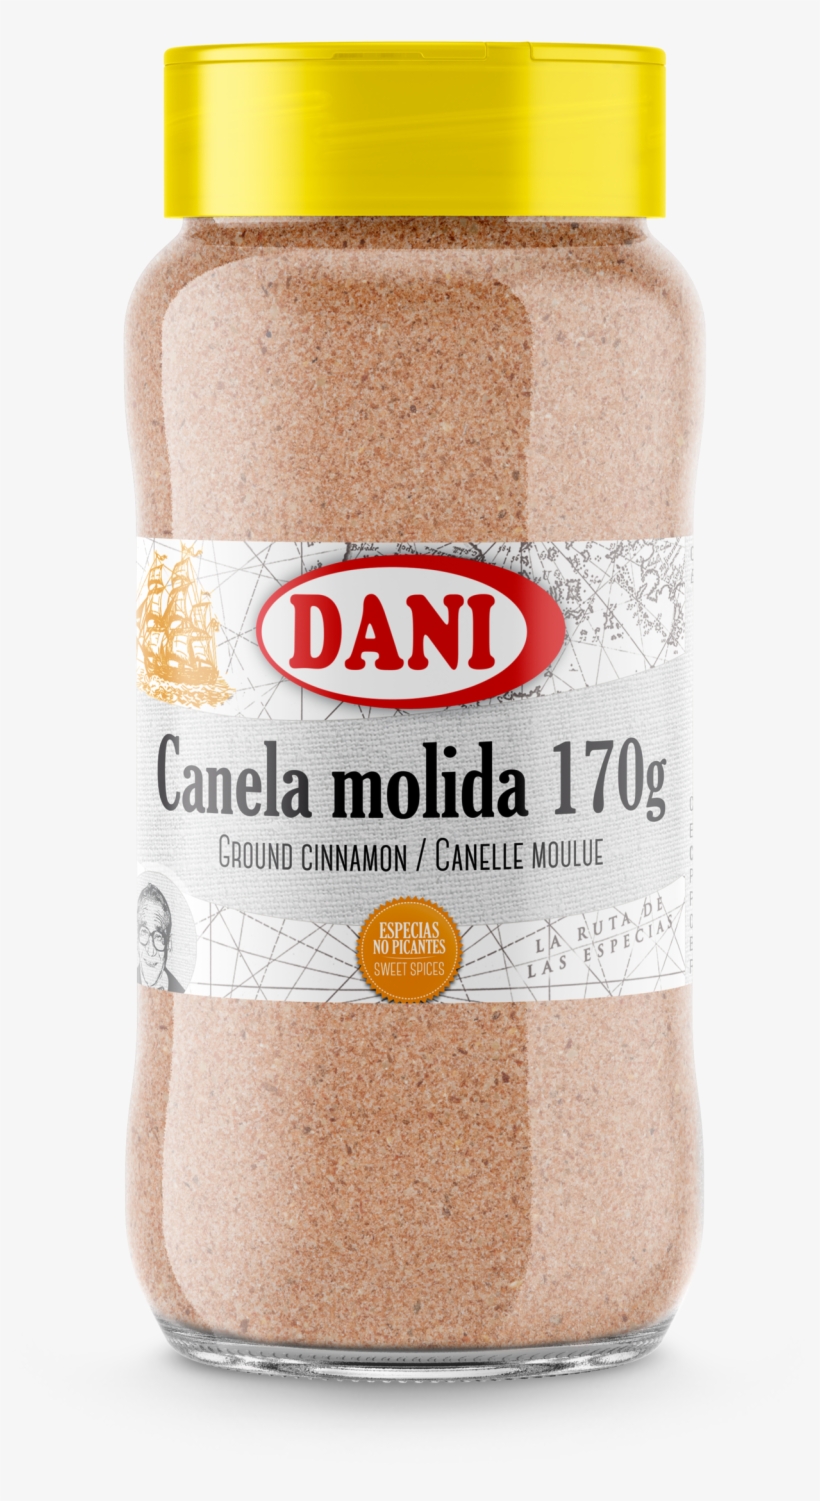 Canela Molida 170g - Conservas Dani, transparent png #4032839